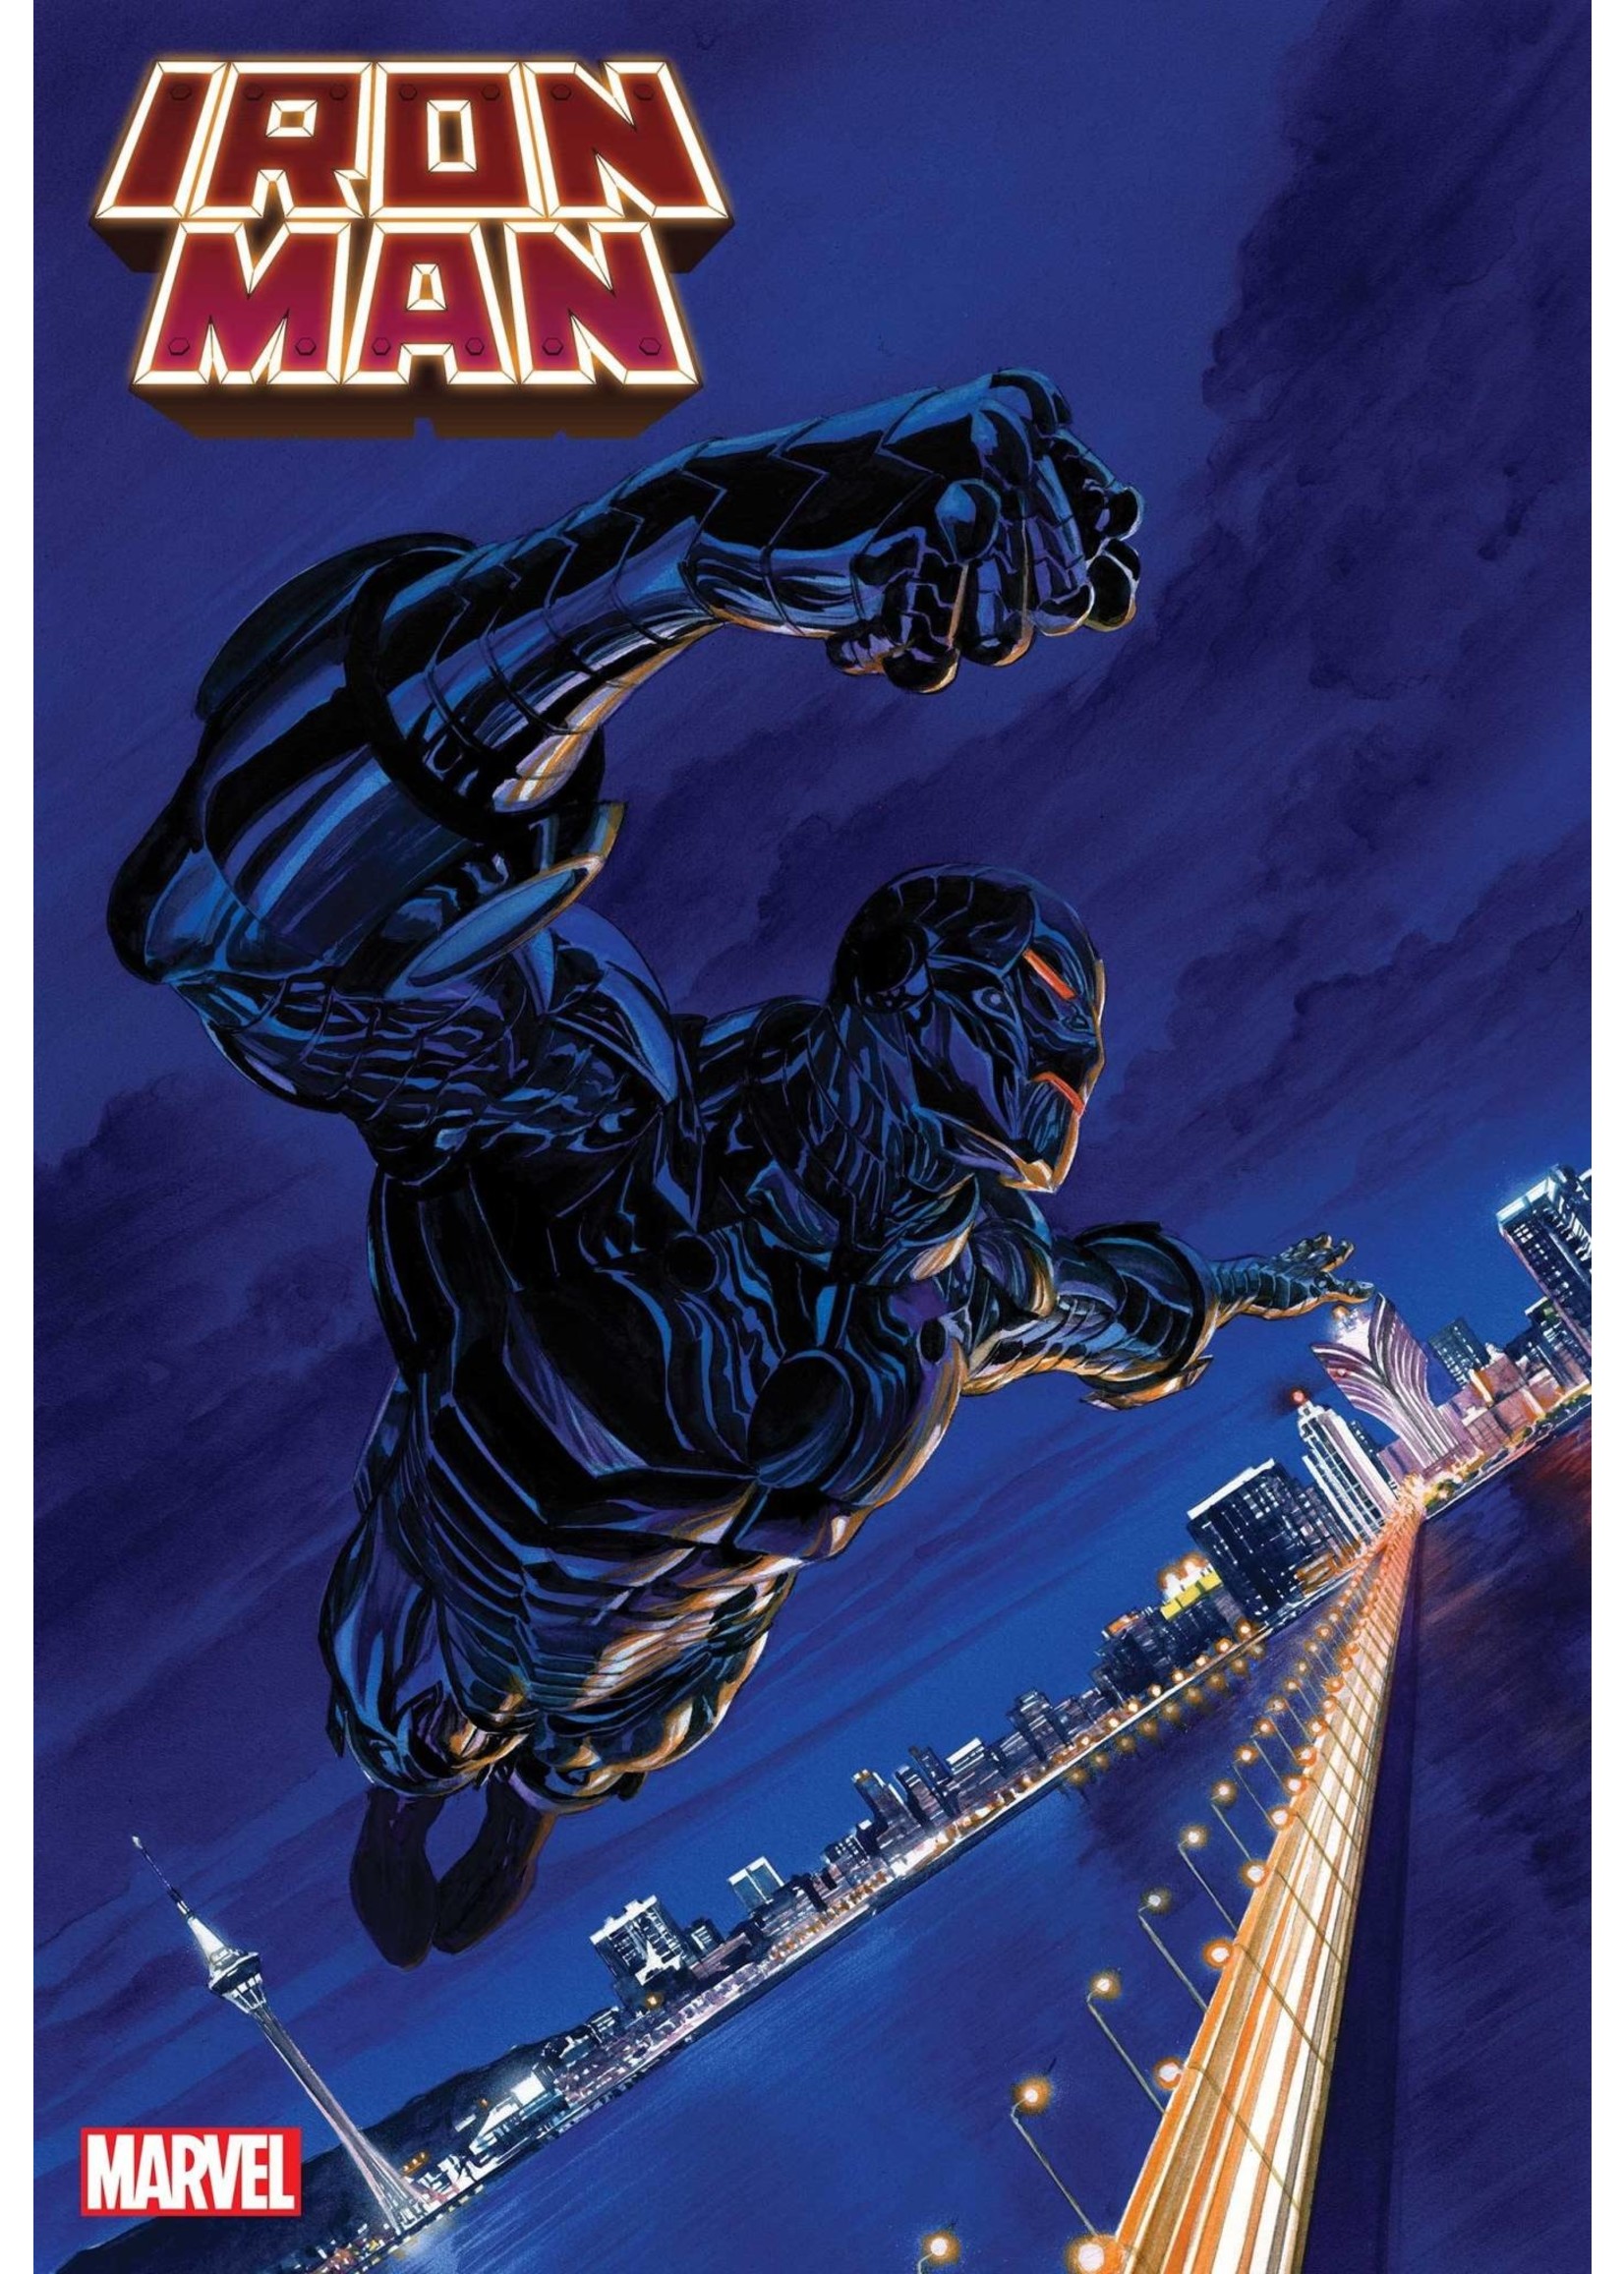 MARVEL COMICS IRON MAN #22